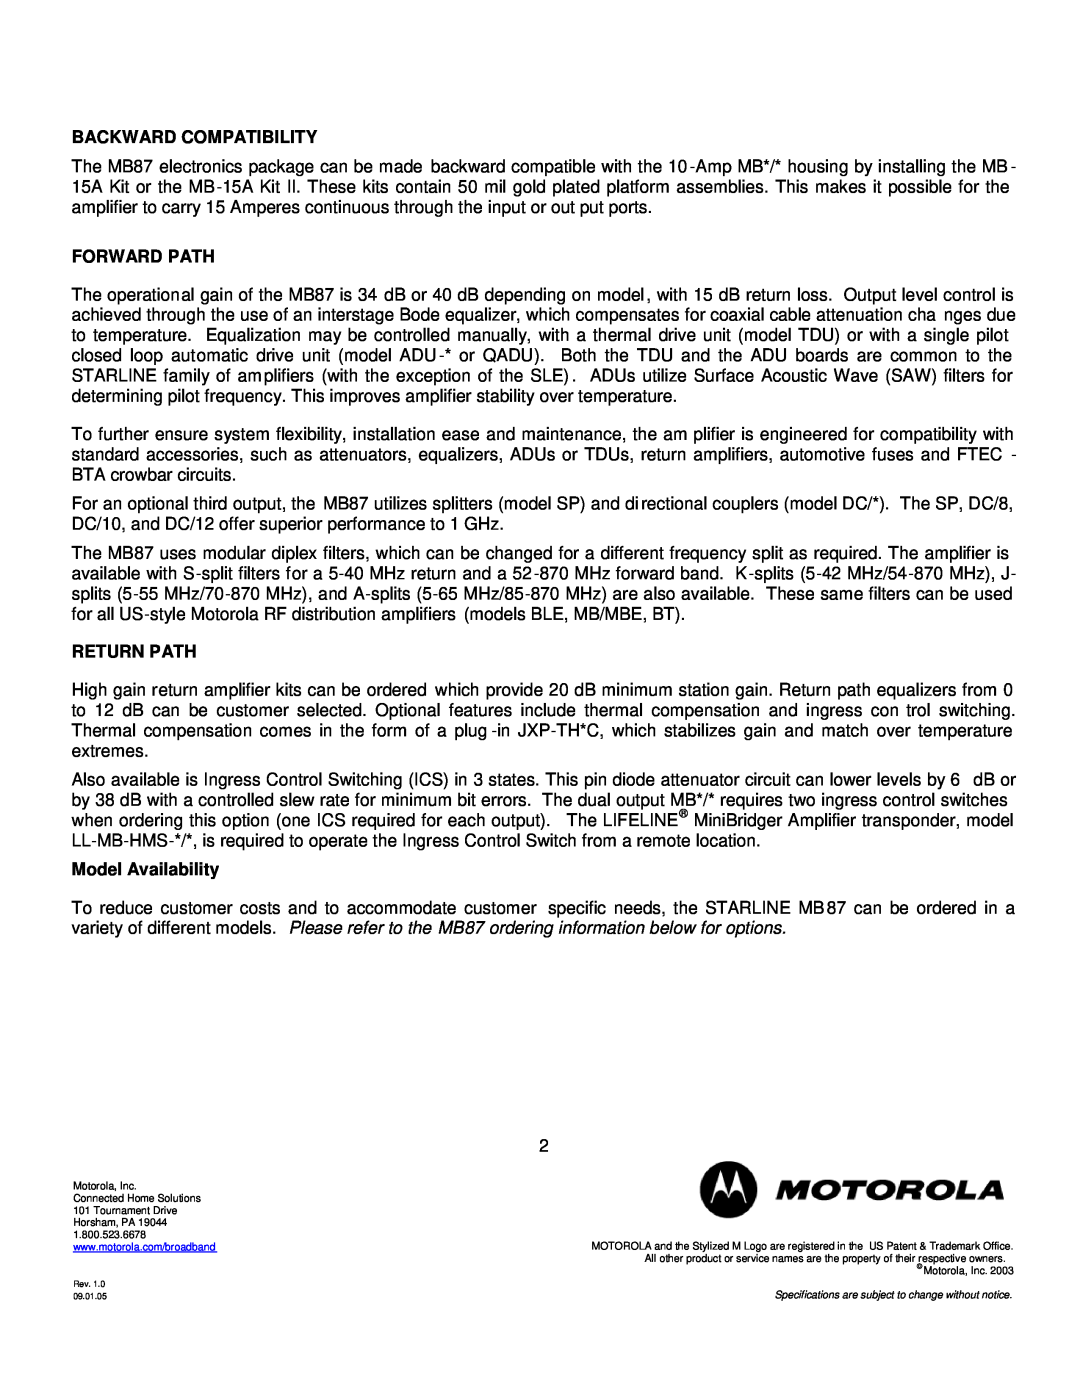 Motorola MB87 specifications Backward Compatibility, Forward Path, Return Path, Model Availability 